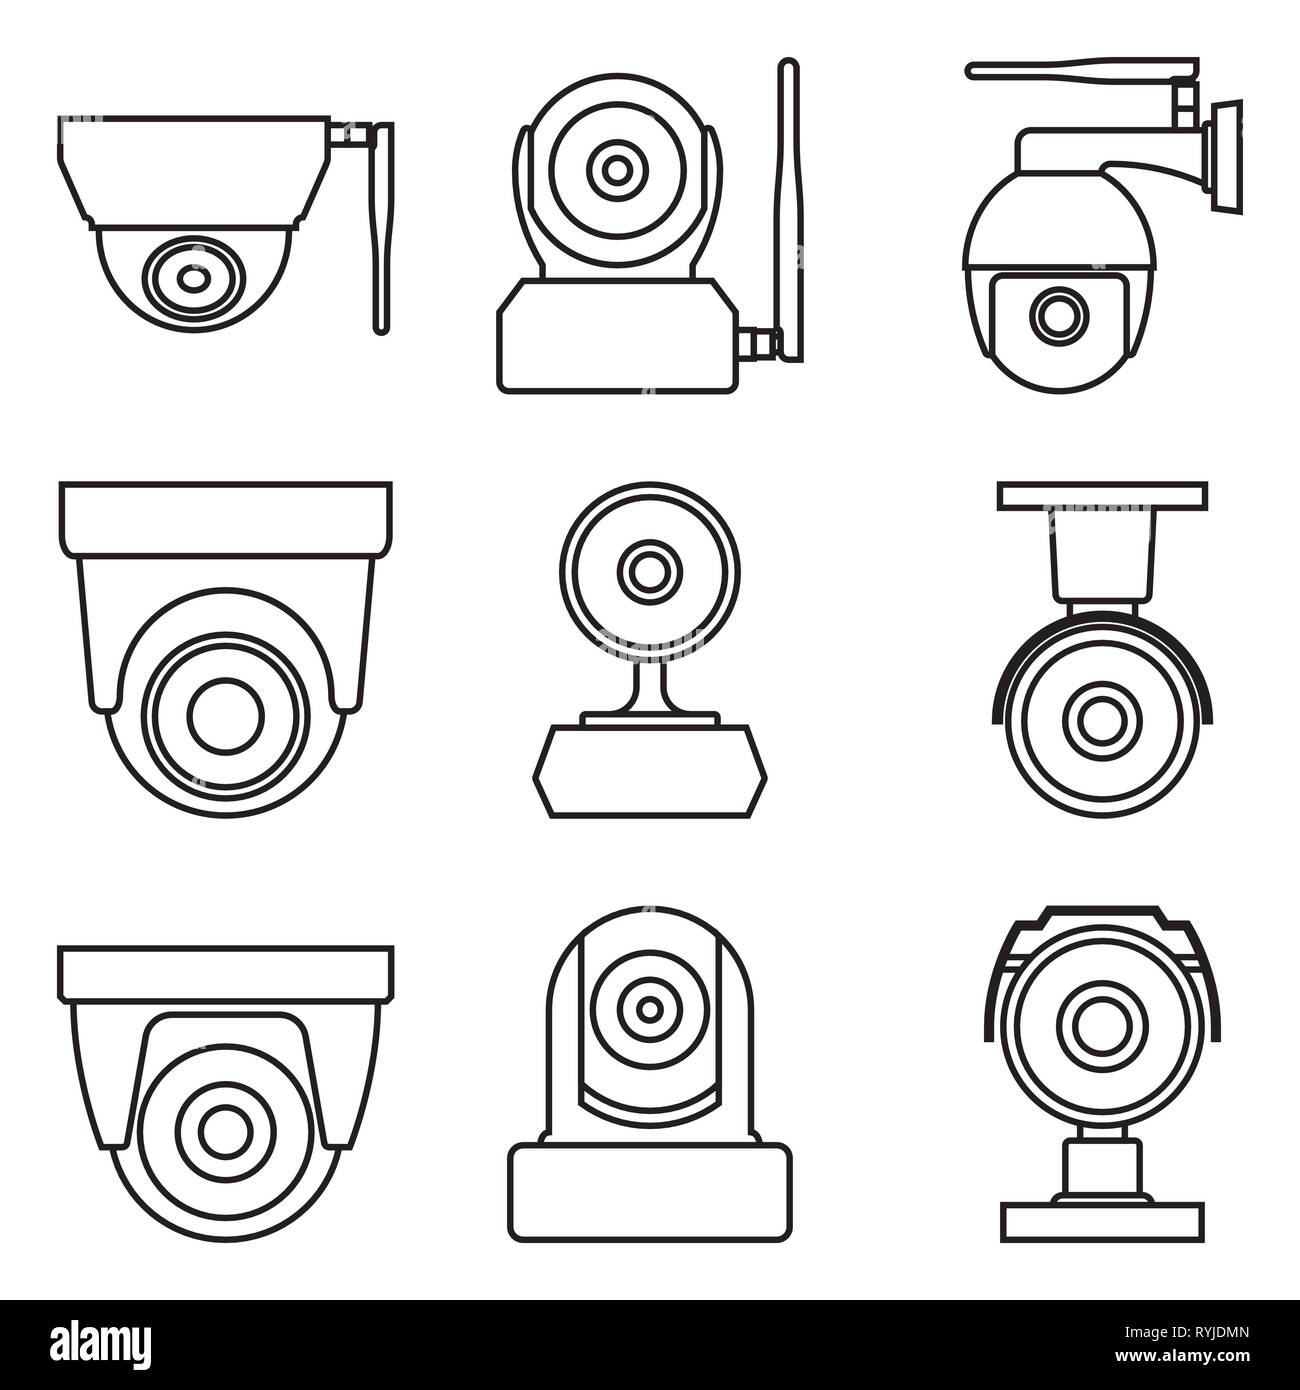 Security camera. Home surveillance equipment. Flat vector icons Stock Vector